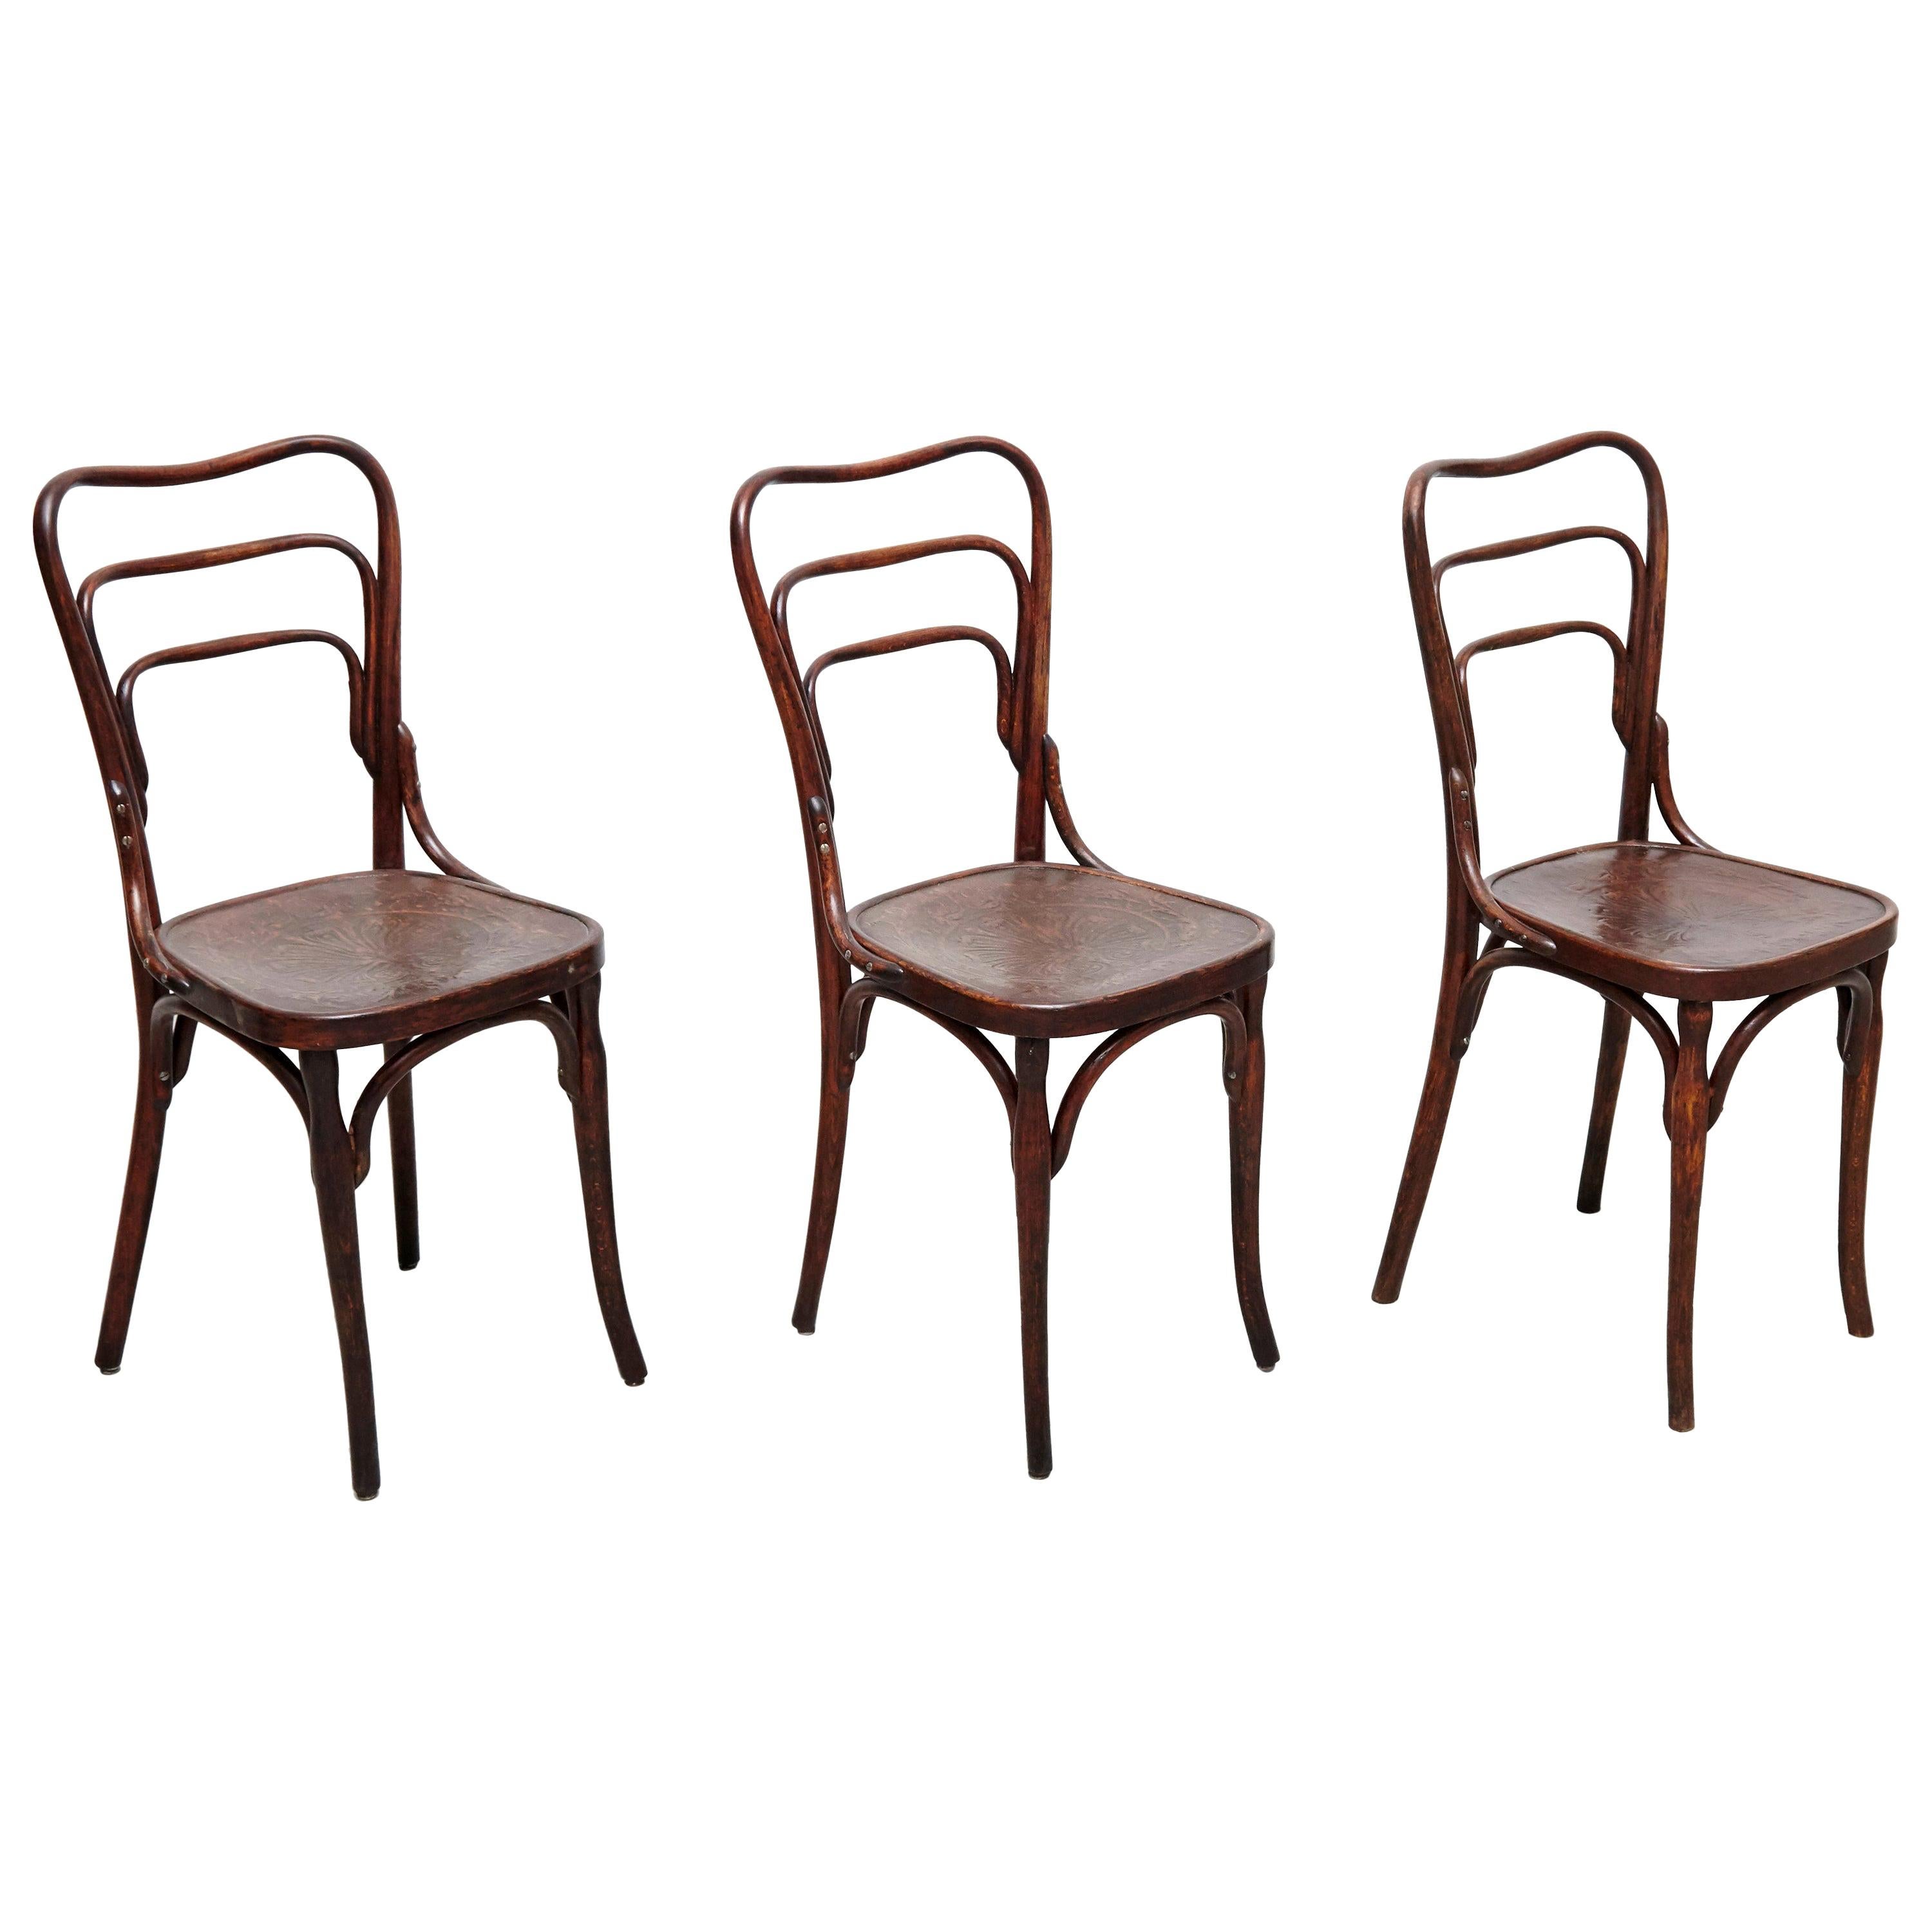 Set of Three J & J. Khon Chairs, circa 1900